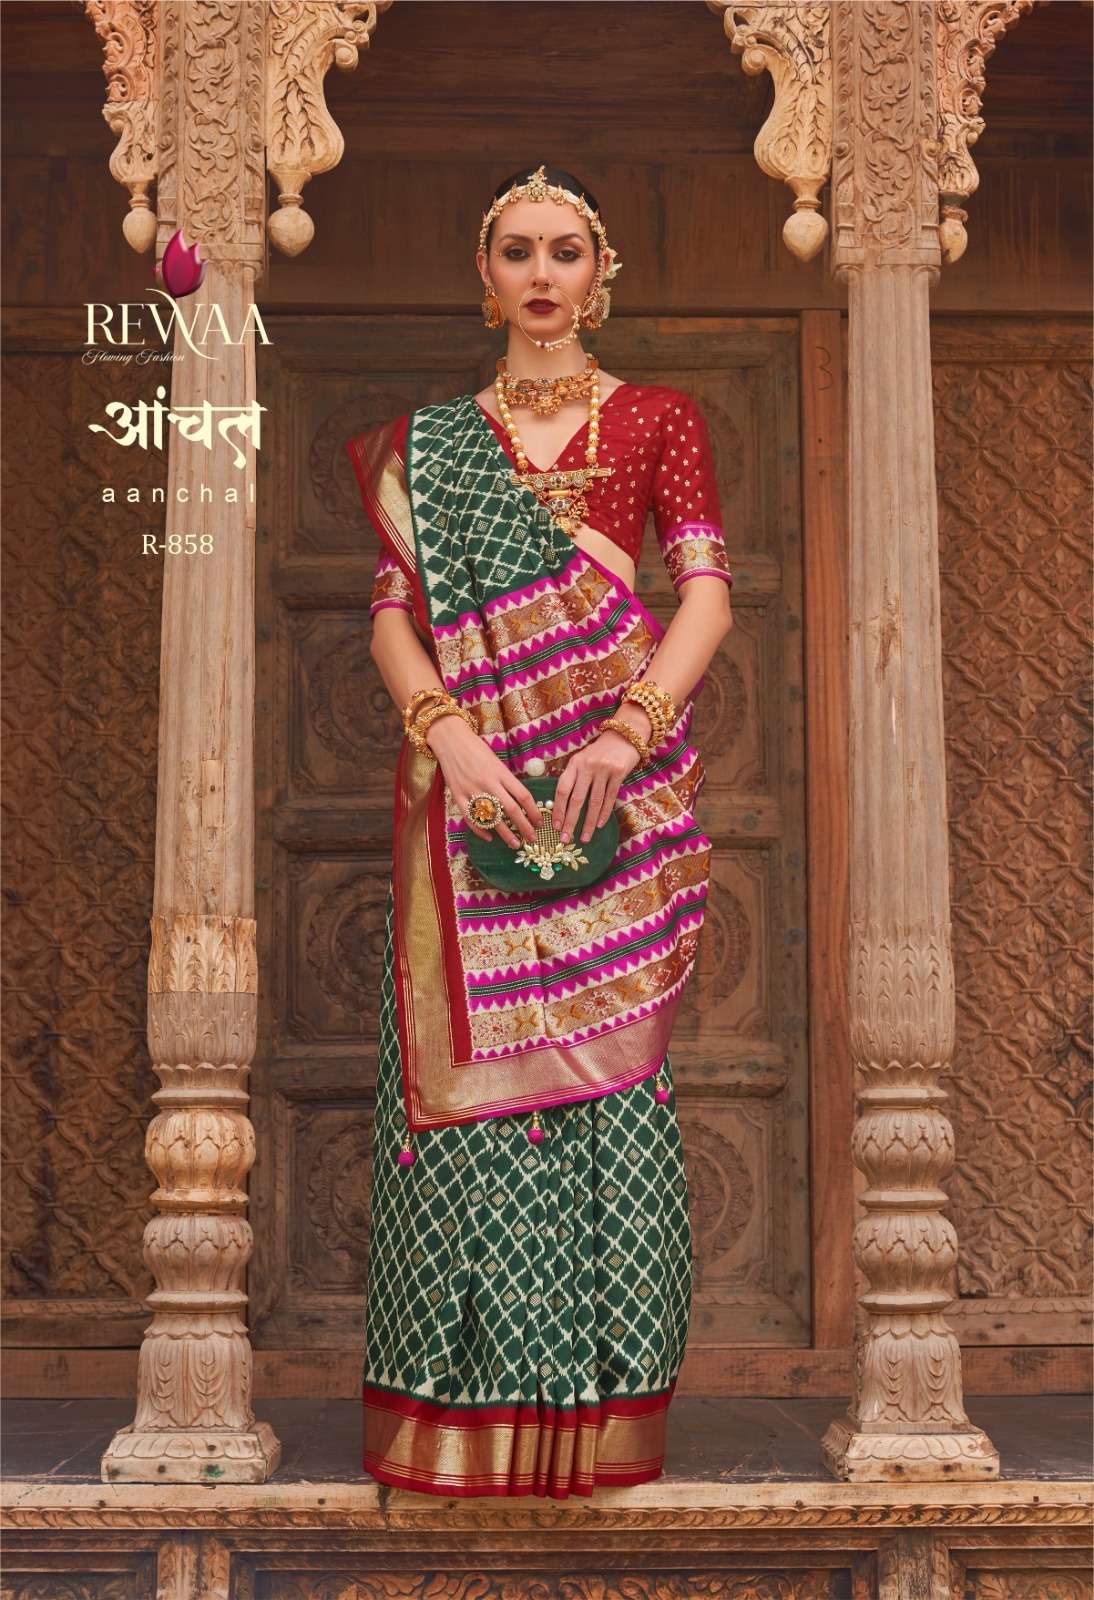 Manjula Presents Rewaa Aanchal R-558 To R-569 Series Latest Designer Saree Collection At Best Price 